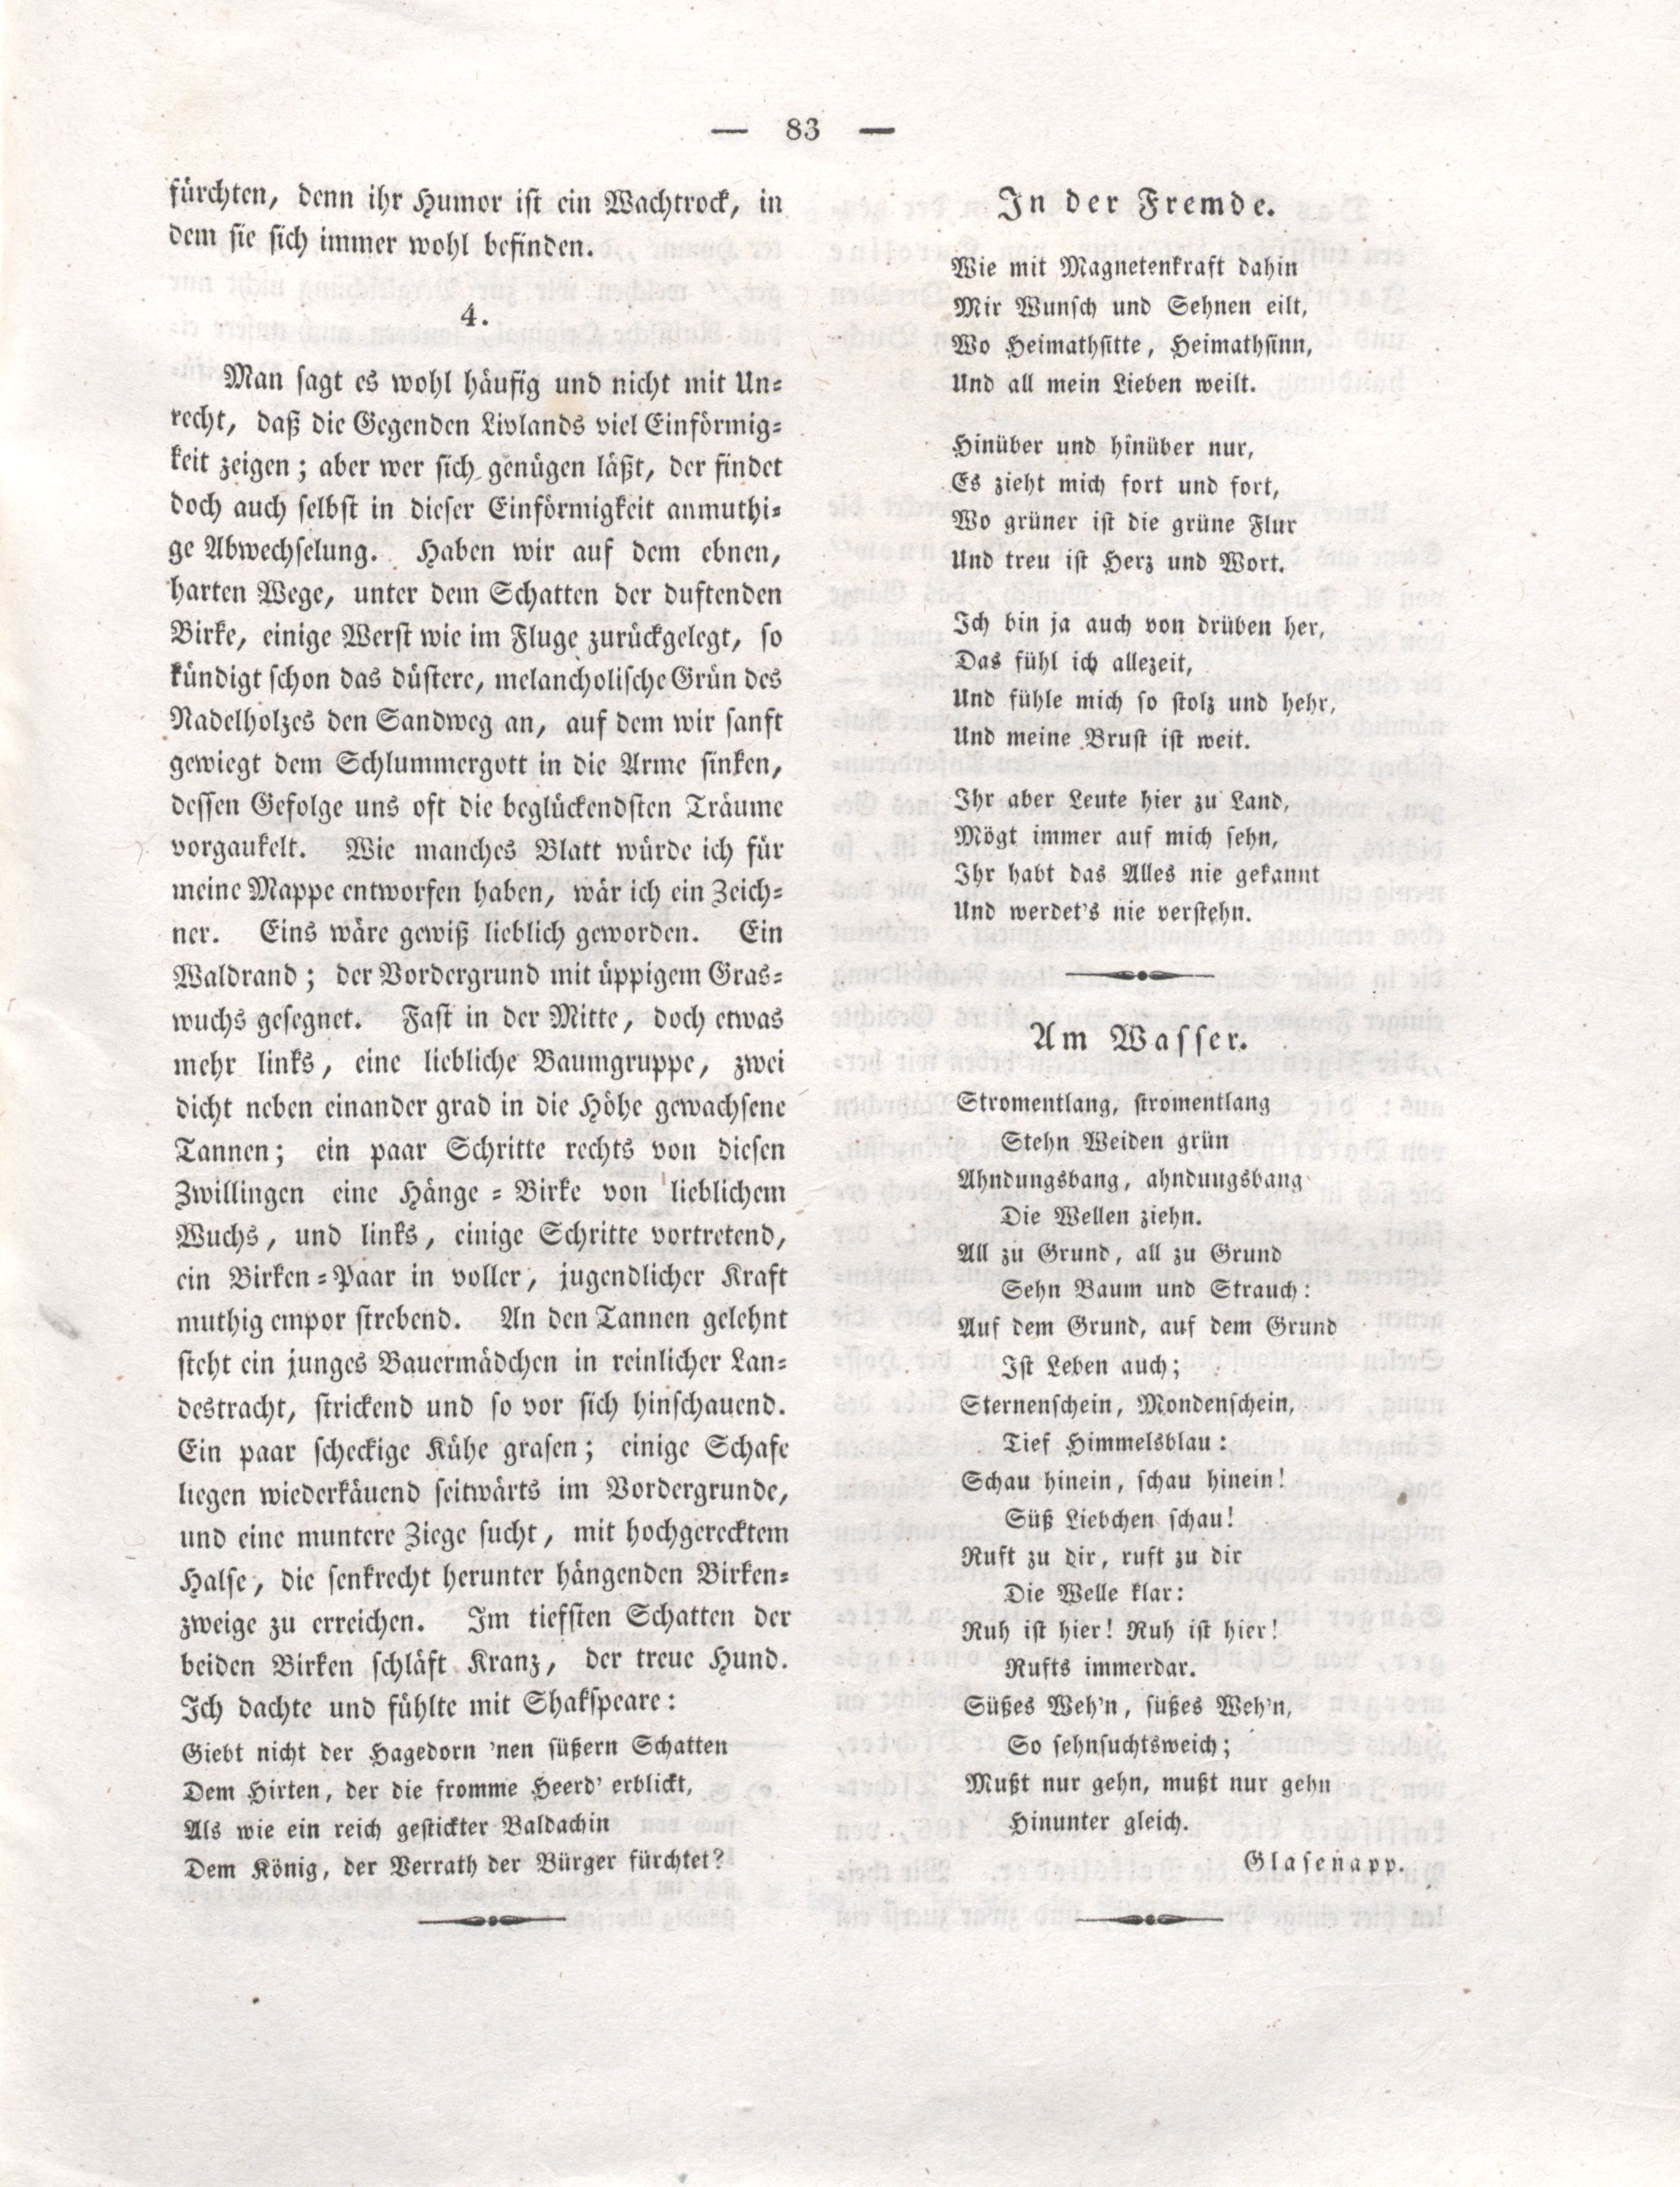 Am Wasser (1836) | 1. (83) Основной текст